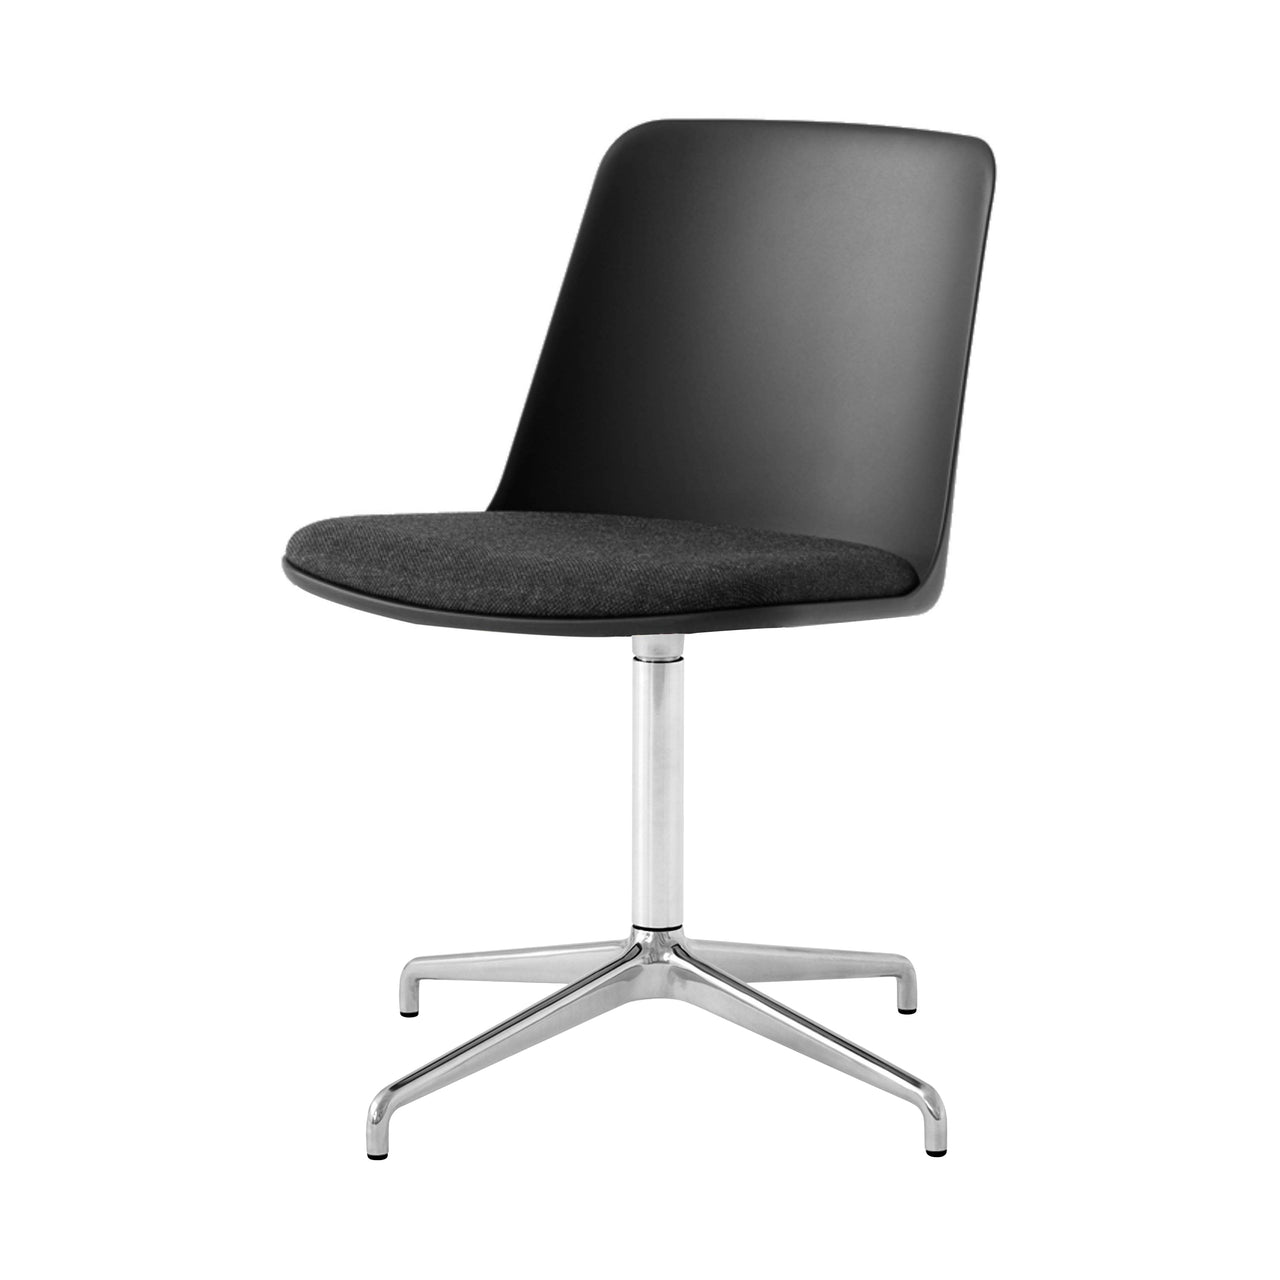 Rely Chair HW17: Aluminum Base + Black